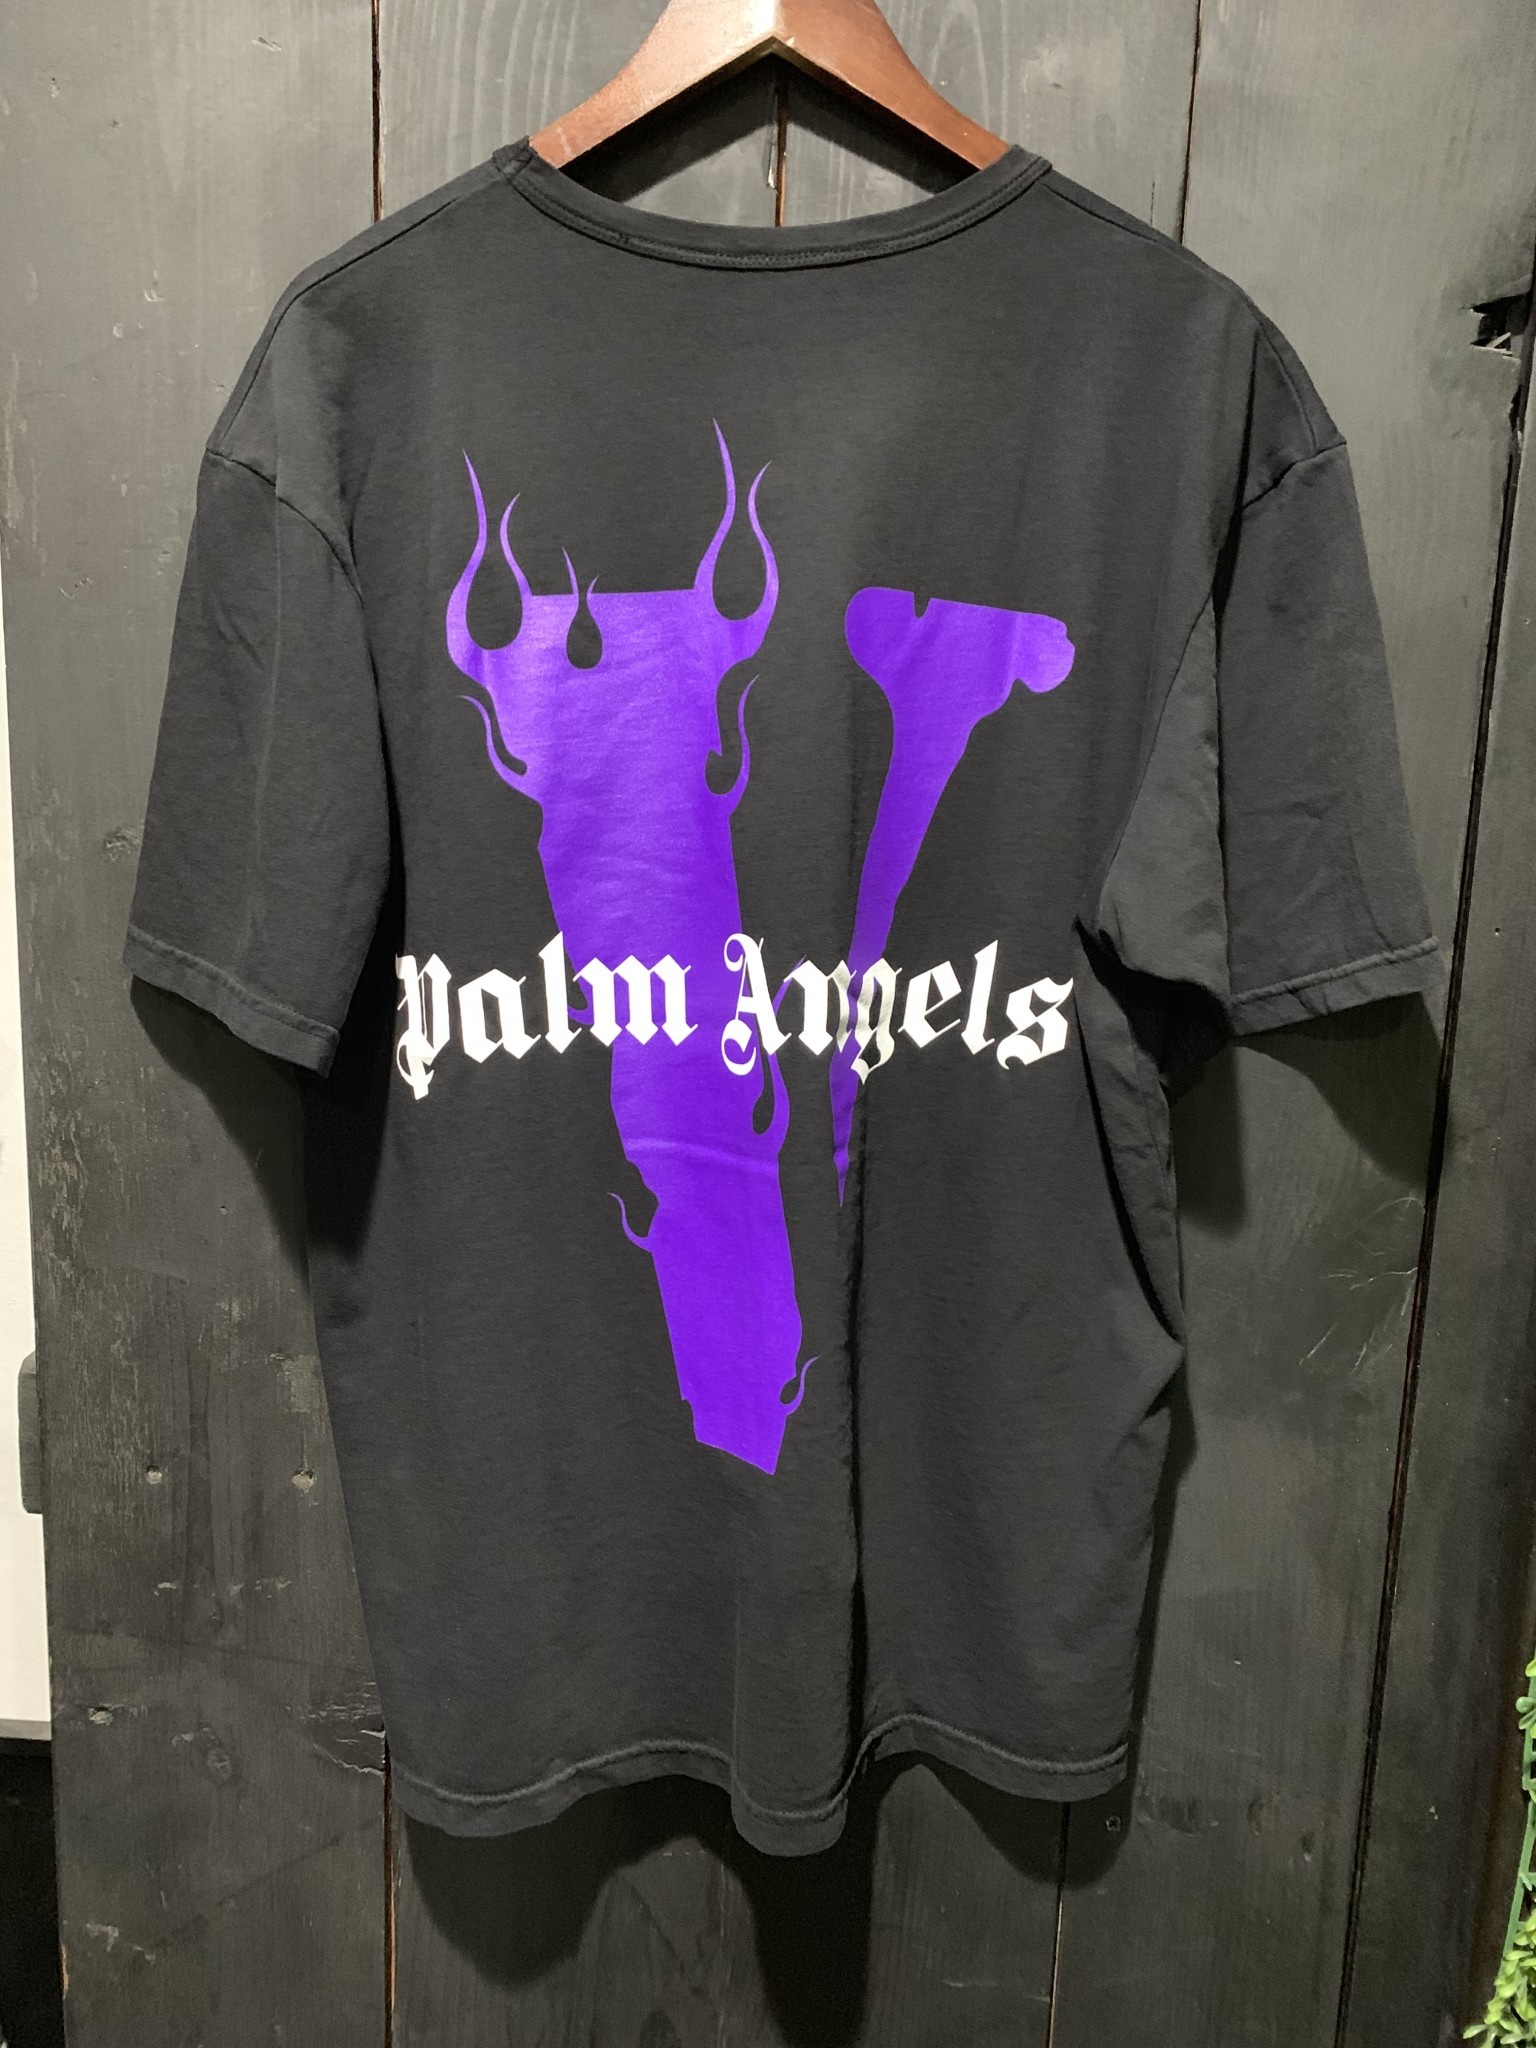 palm angels shirt vlone